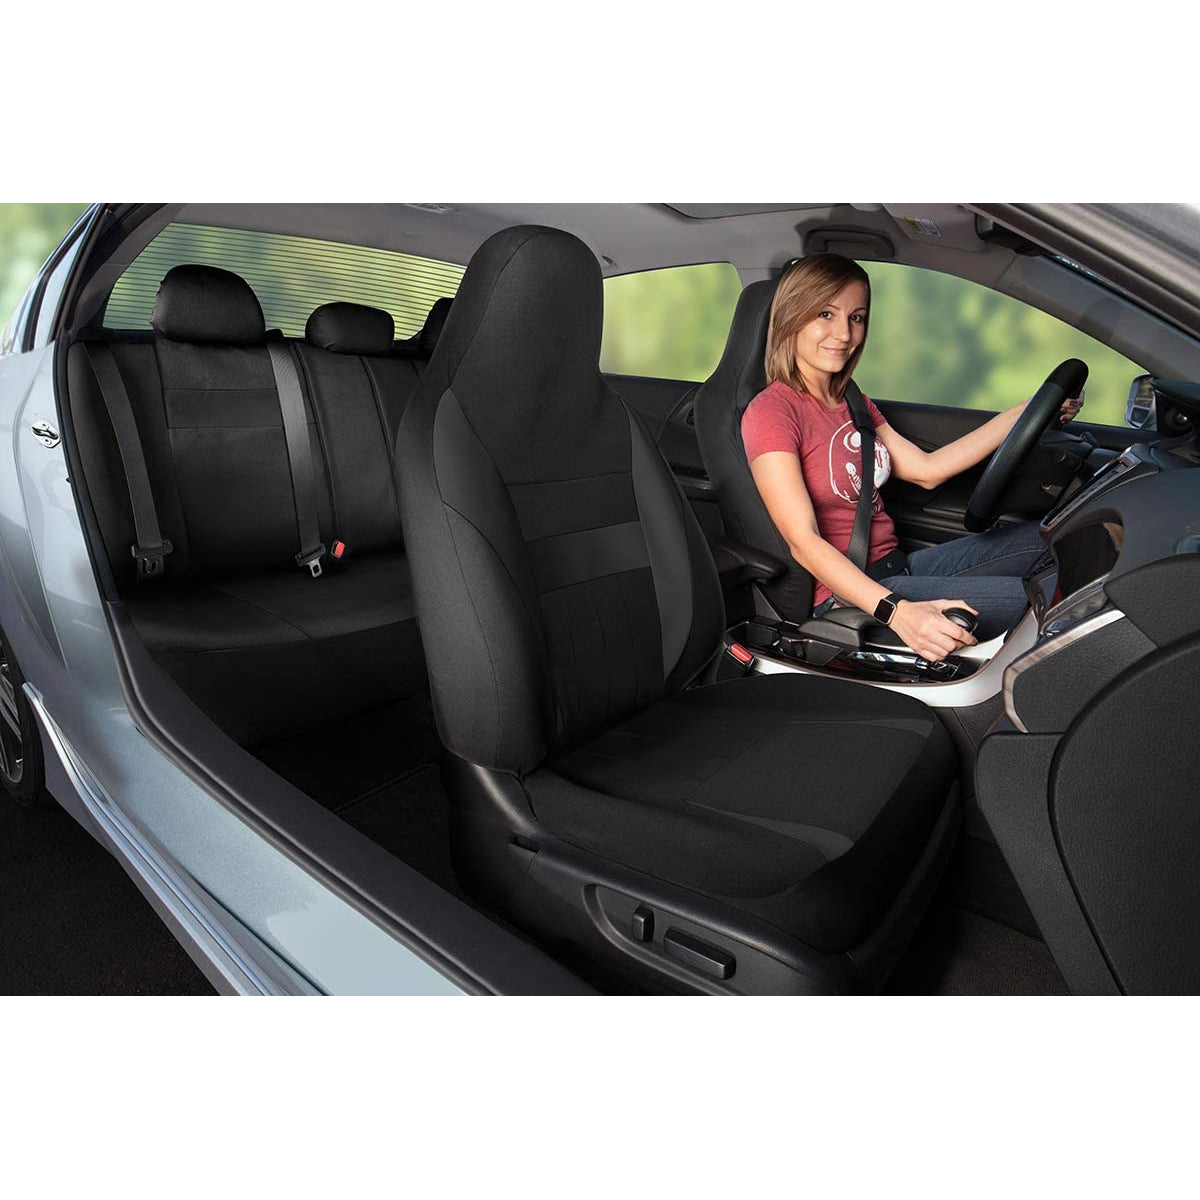 OxGord 10Pc Seat Cover Set for Car, Truck, SUV - Cloth, Solid Black